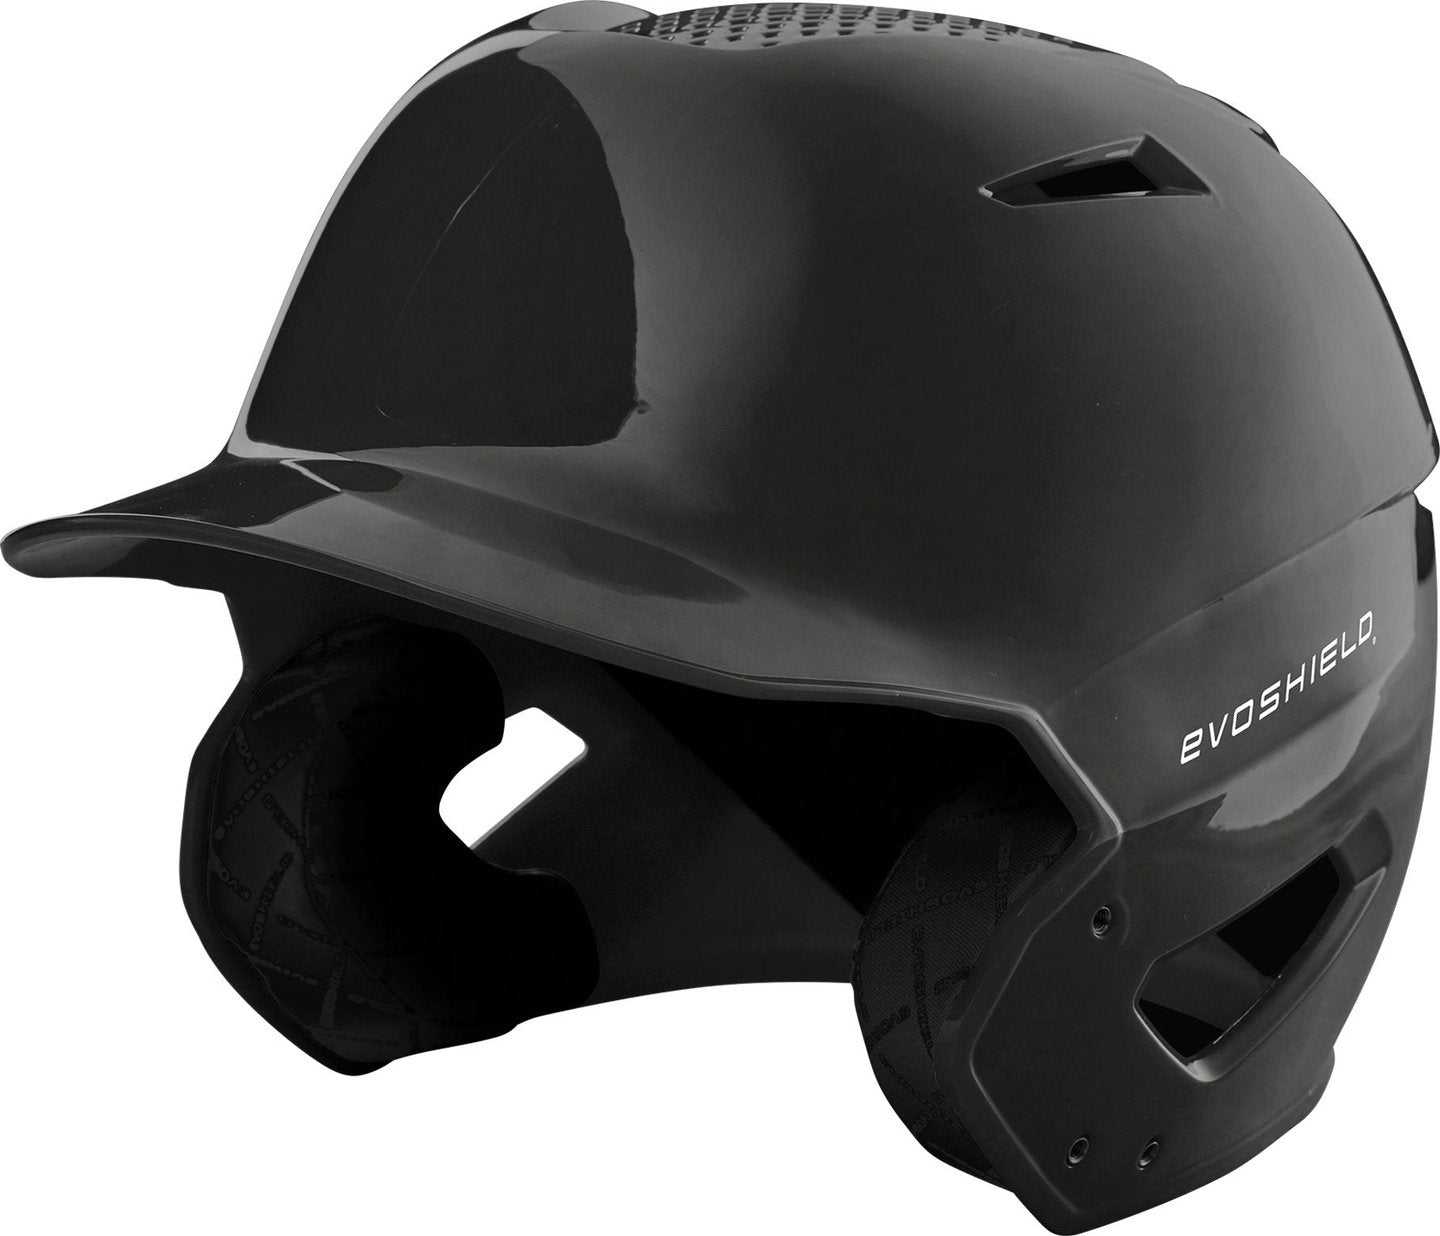 EvoShield XVT Batting Helmet - Black - HIT A Double